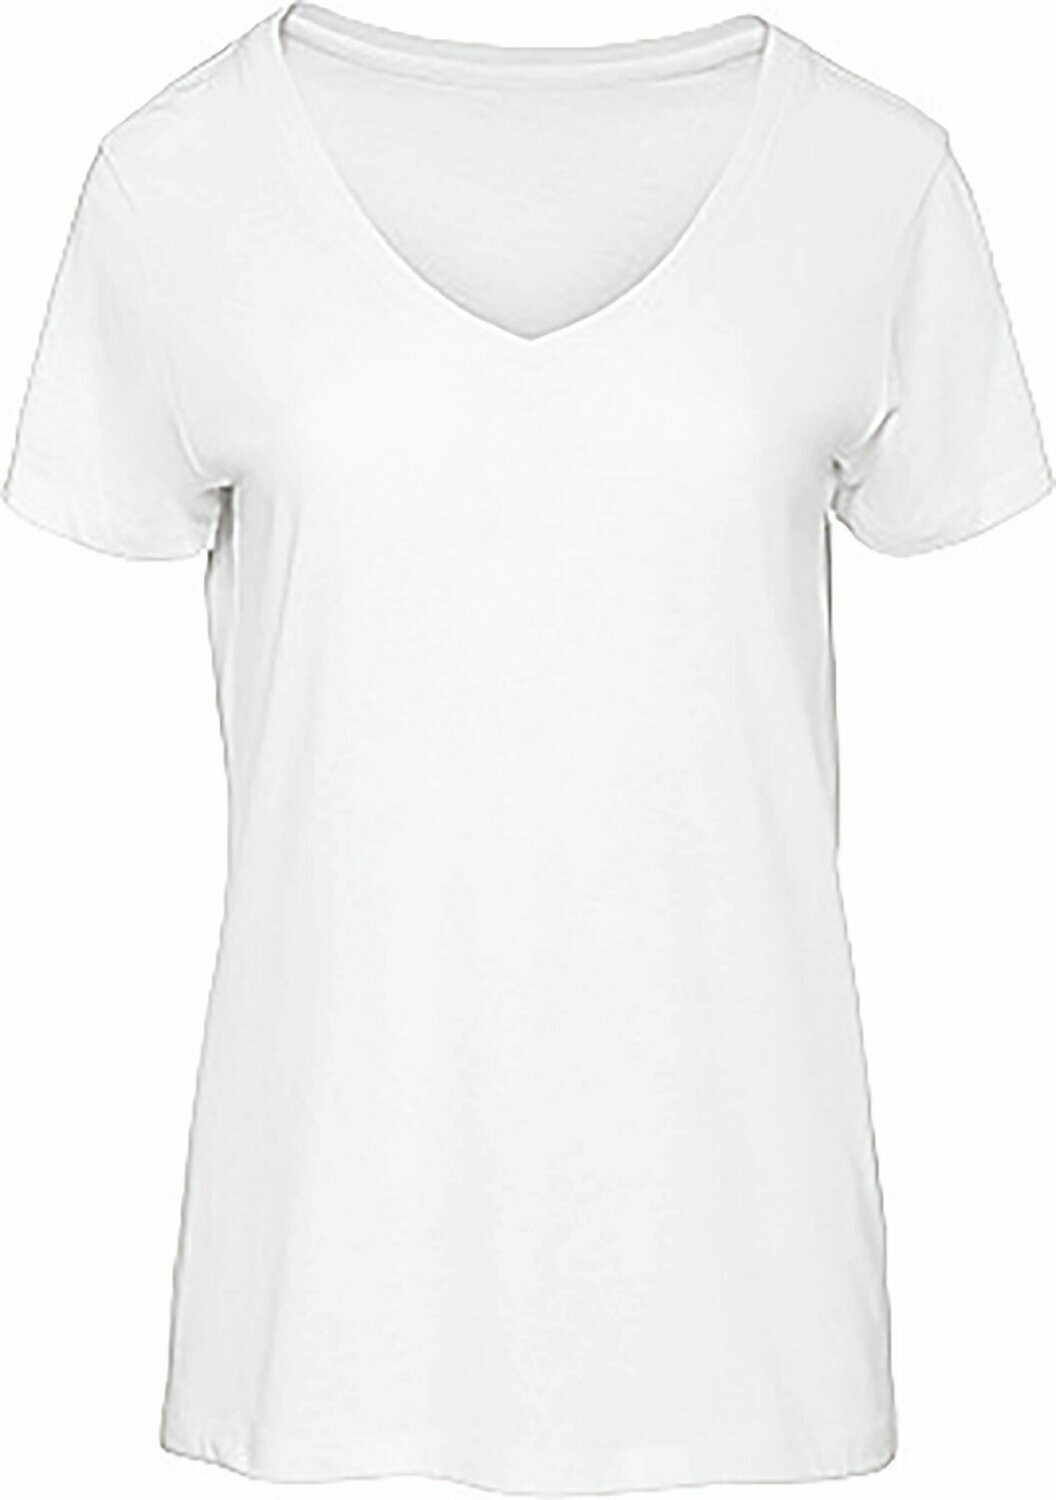 Tee-shirt B&C 100% Coton Bio Femme Col V 140gr, Coloris: Blanc, Taille: XS